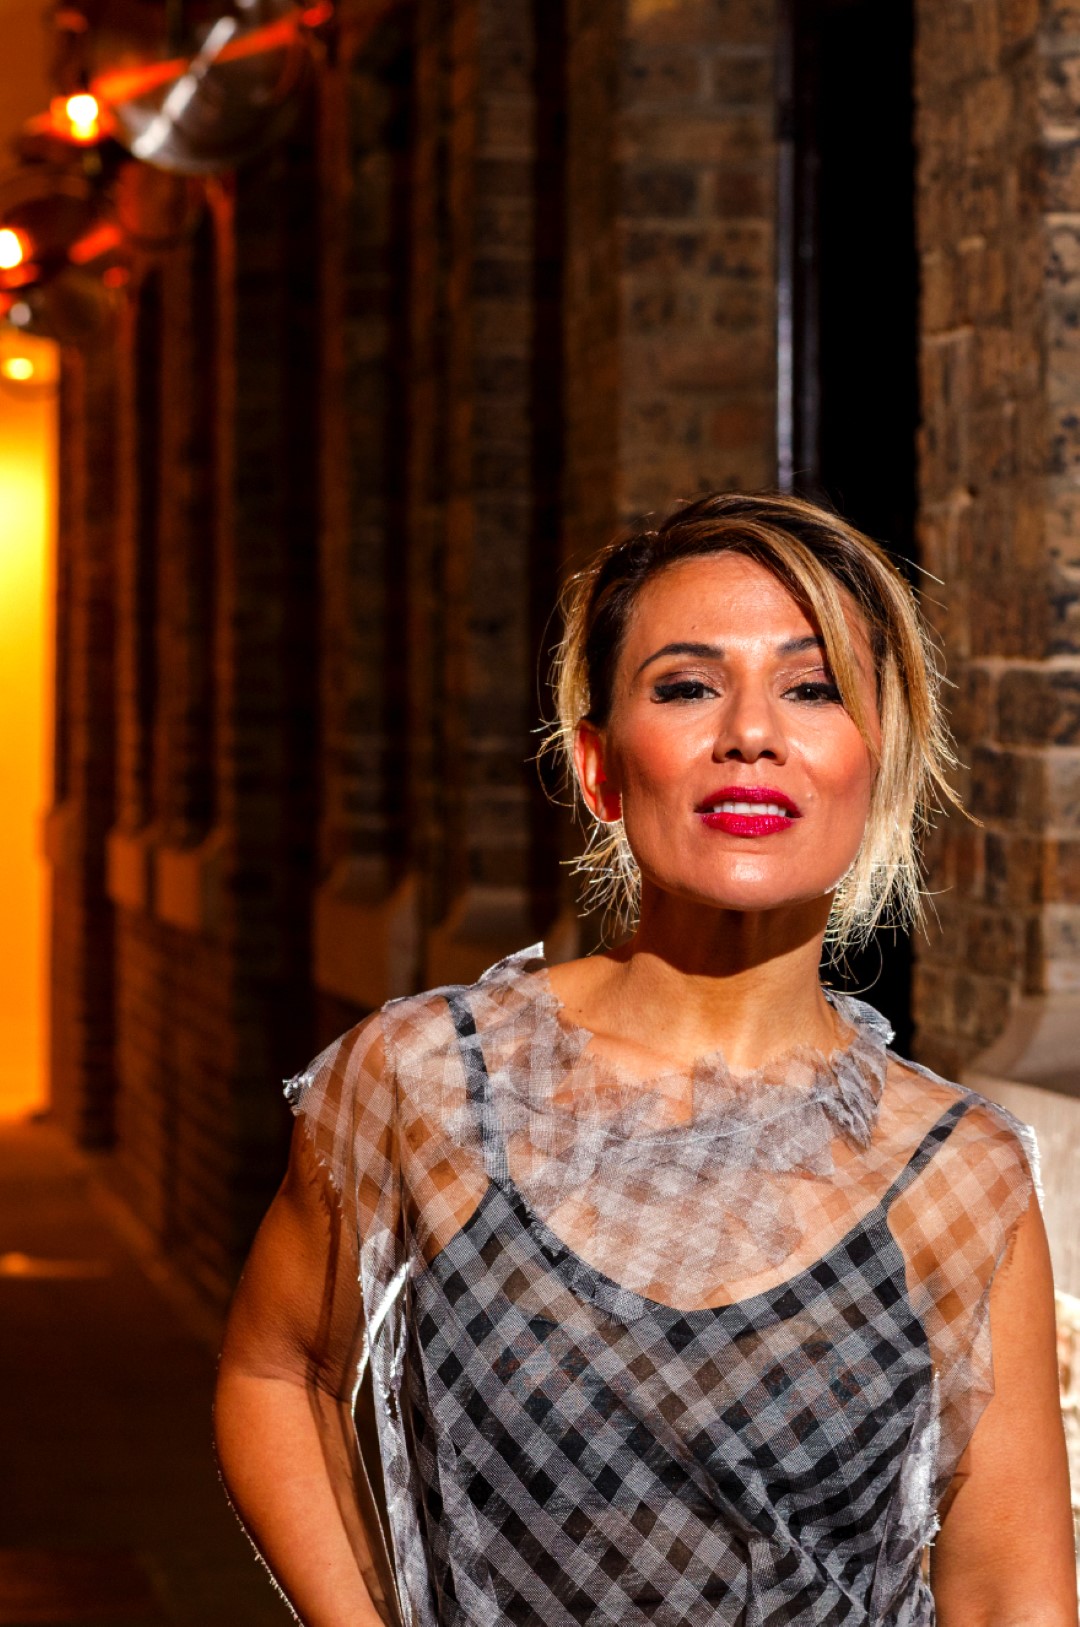 Eurovision Australia Decides 2019: Tania Doko emerges from dark Swedish basements